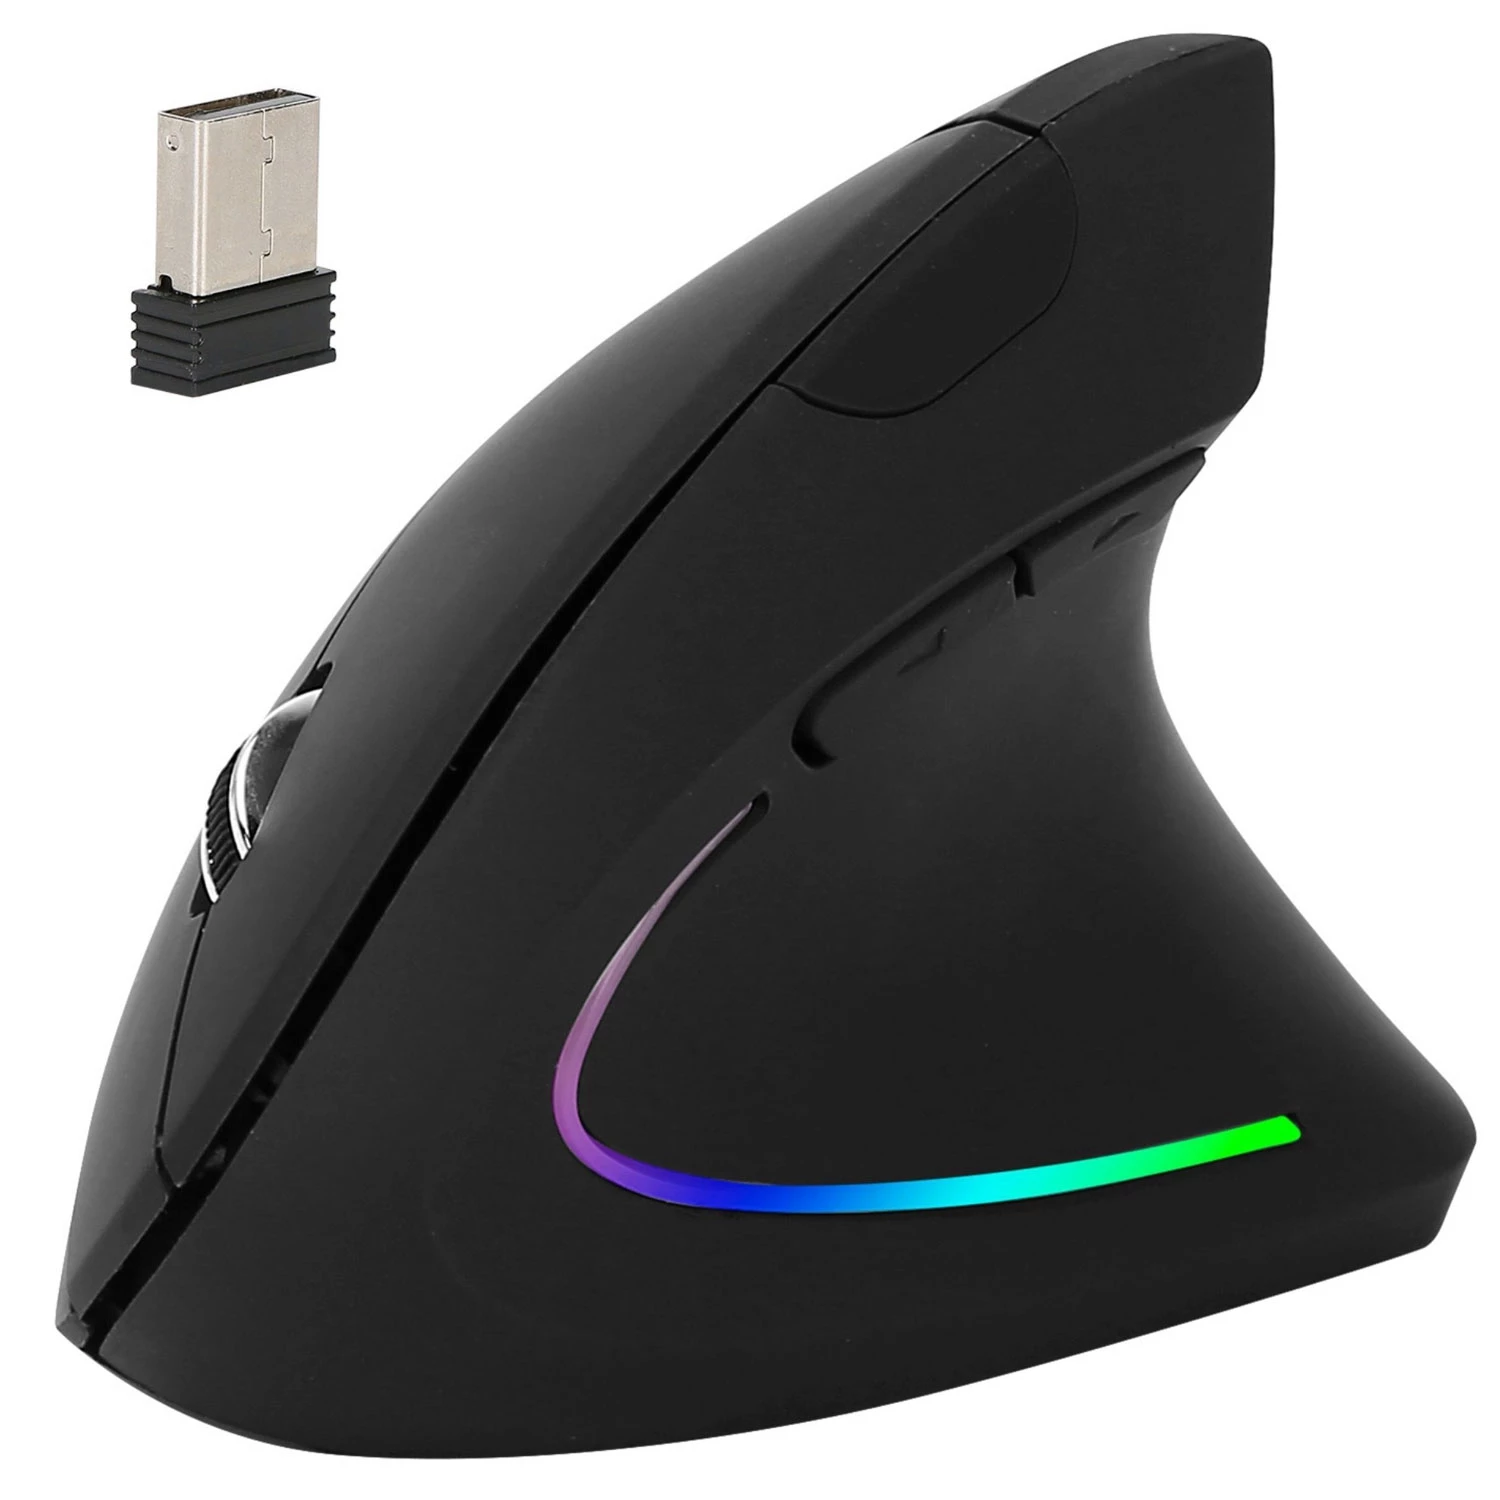 2.4G Wireless Vertical Mouse, 6-Button Ergonomic Optical Mice, 3 Adjustable DPI (800/1200/1600)